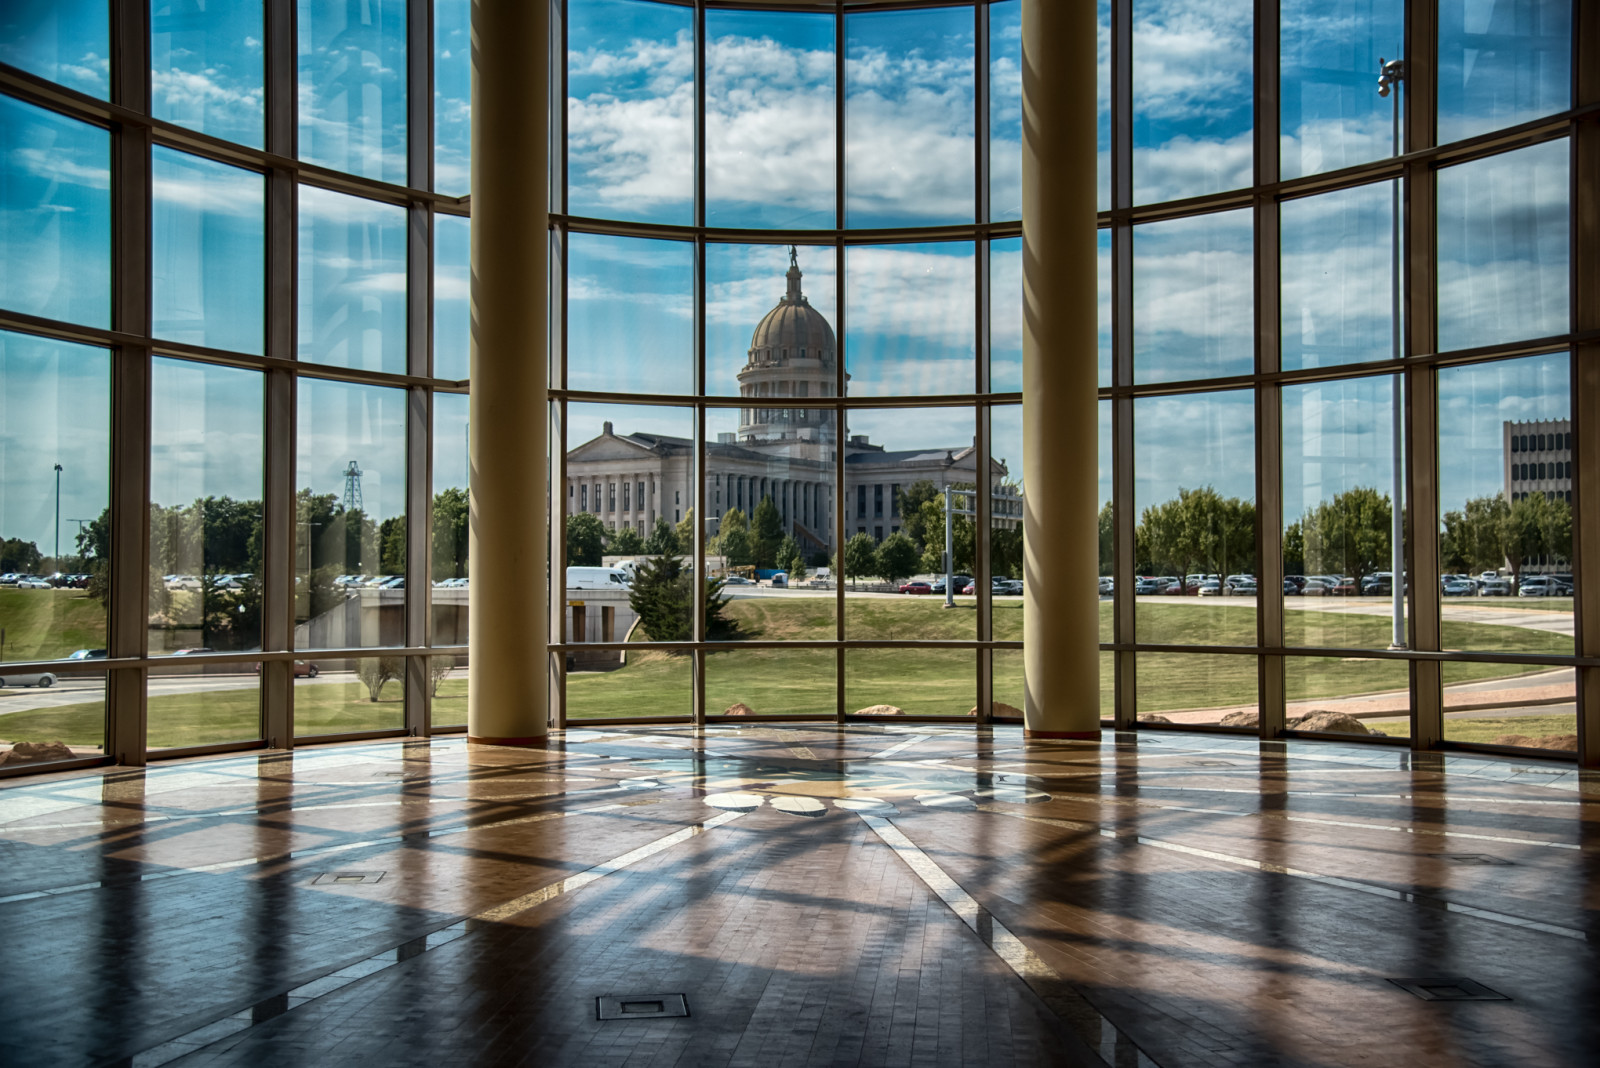 melihat, jendela, kolom, Pusat Sejarah Oklahoma